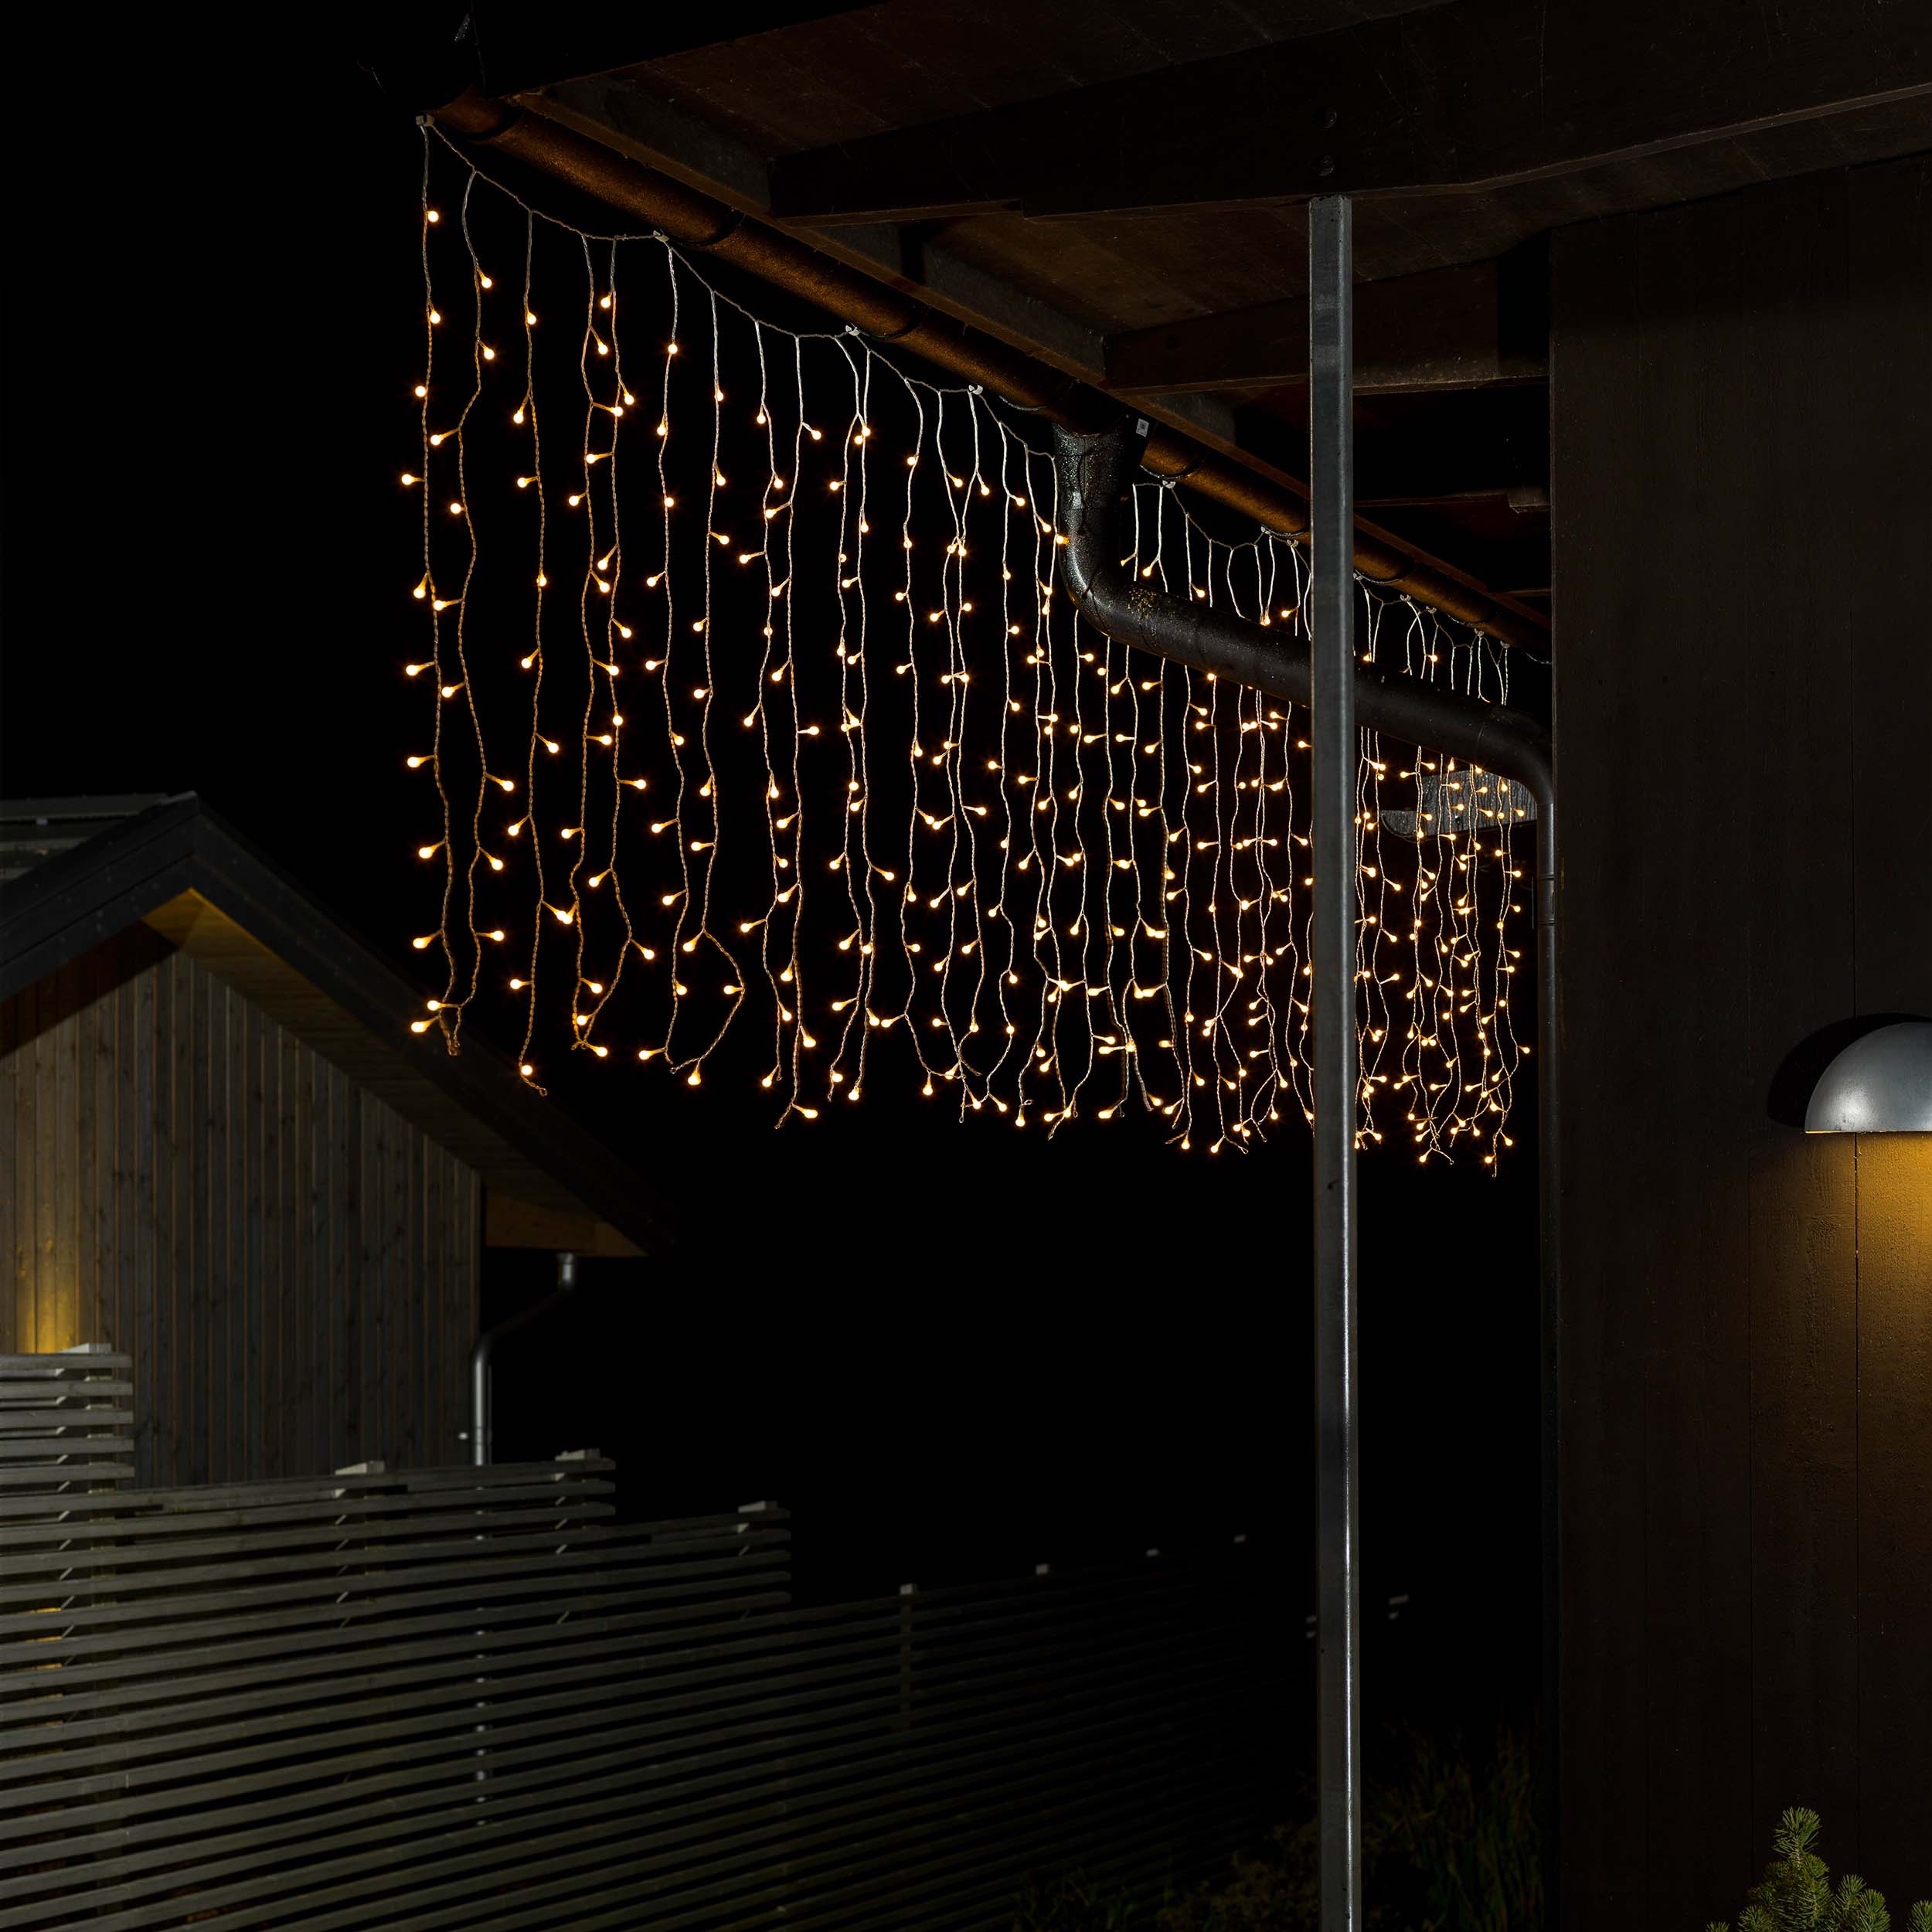 LED light curtain with 400 warmwhite LEDs